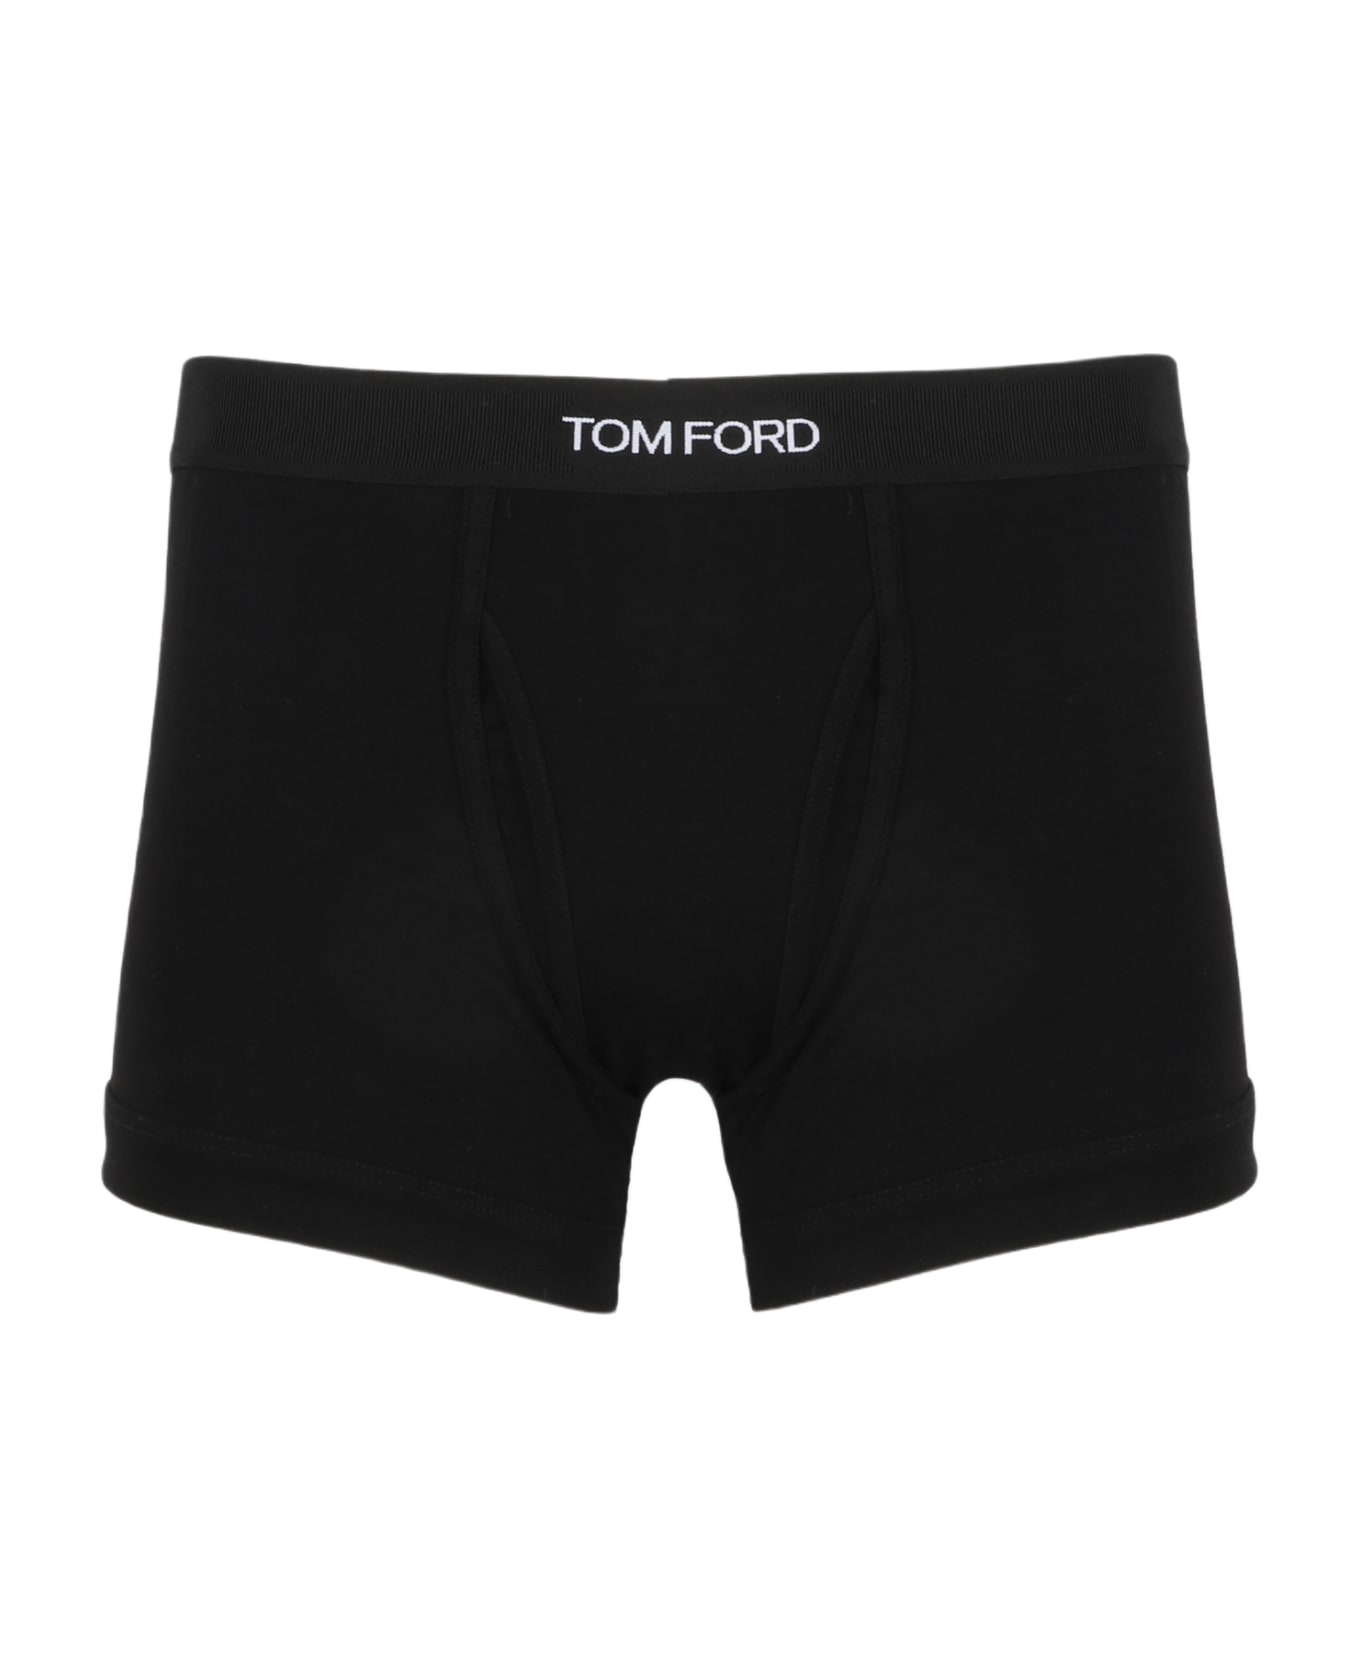 Tom Ford Cotton Boxer Briefs - Black